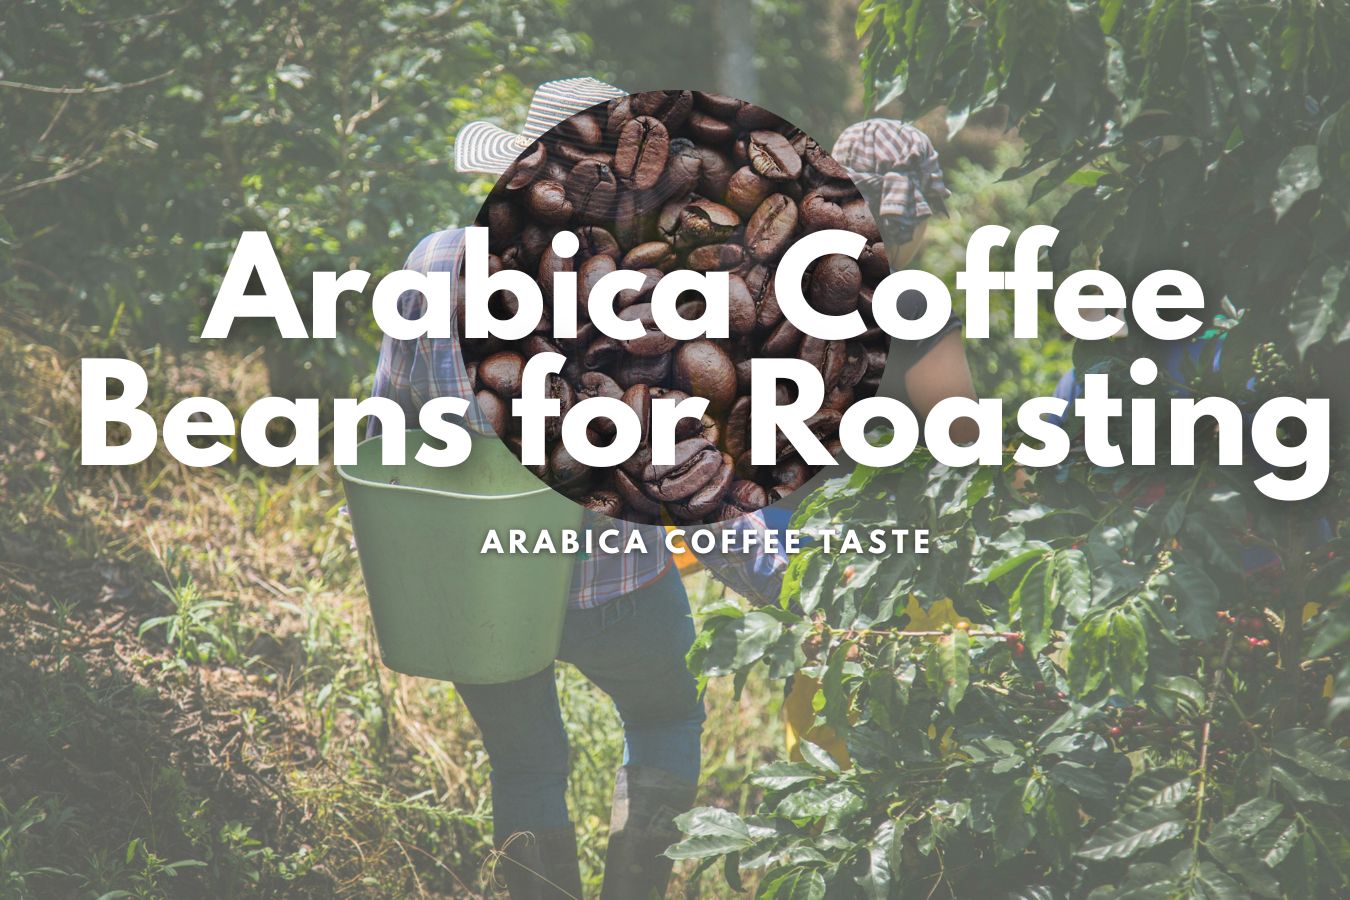 Arabica Coffee Beans for Roasting, Arabica Coffee Taste A Complete Guide